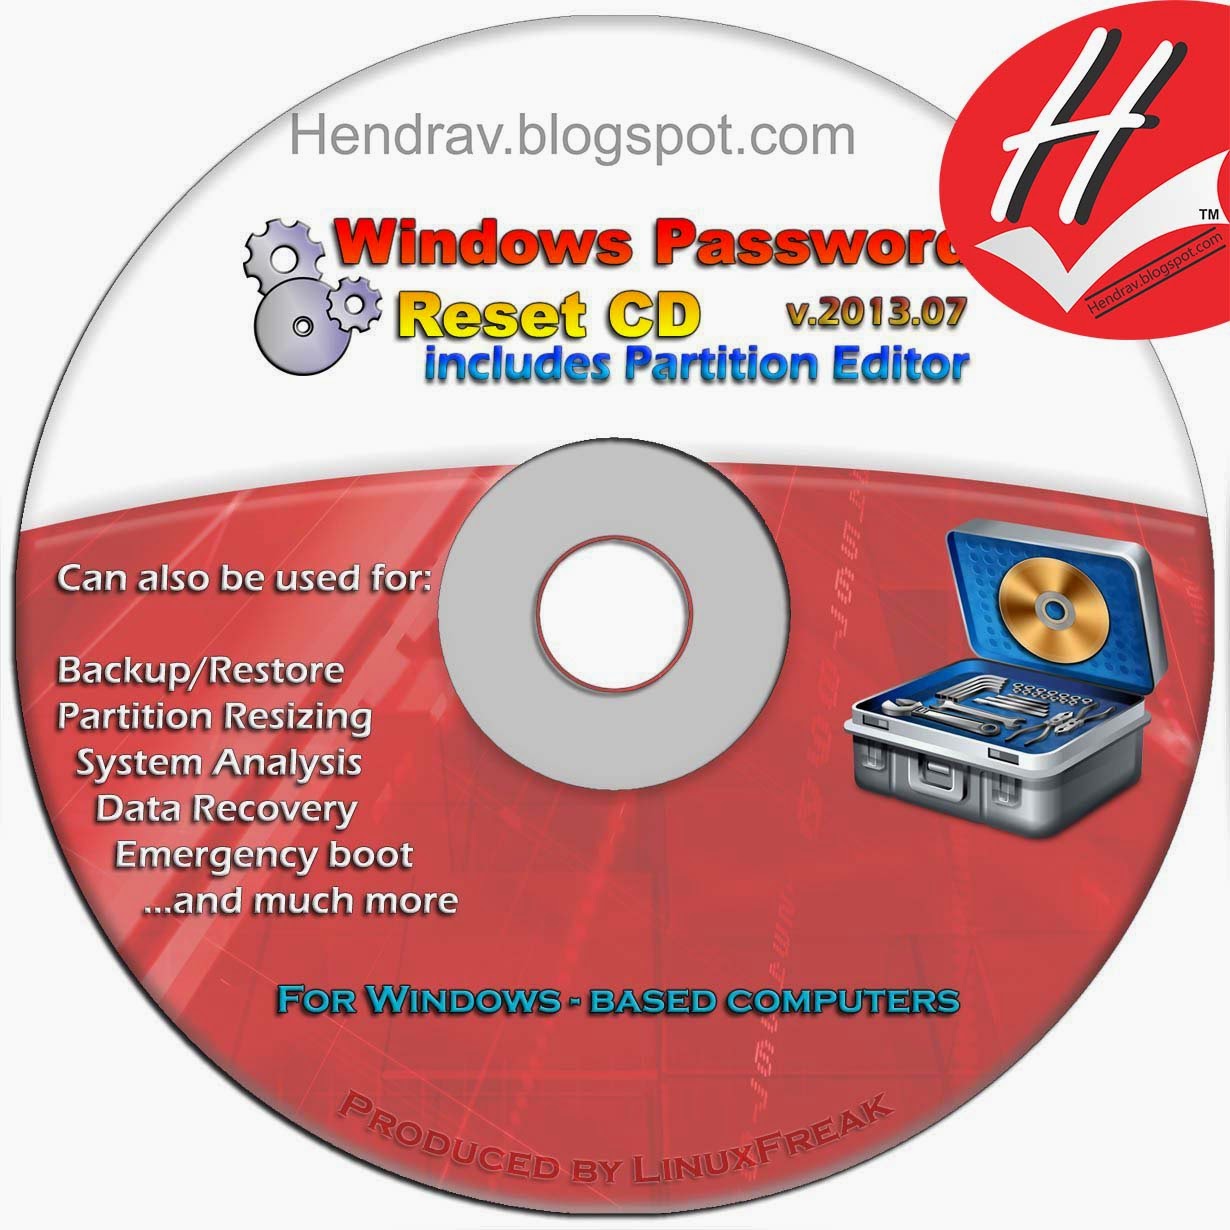 http://hendrav.blogspot.com/2014/10/download-software-windows-password.html